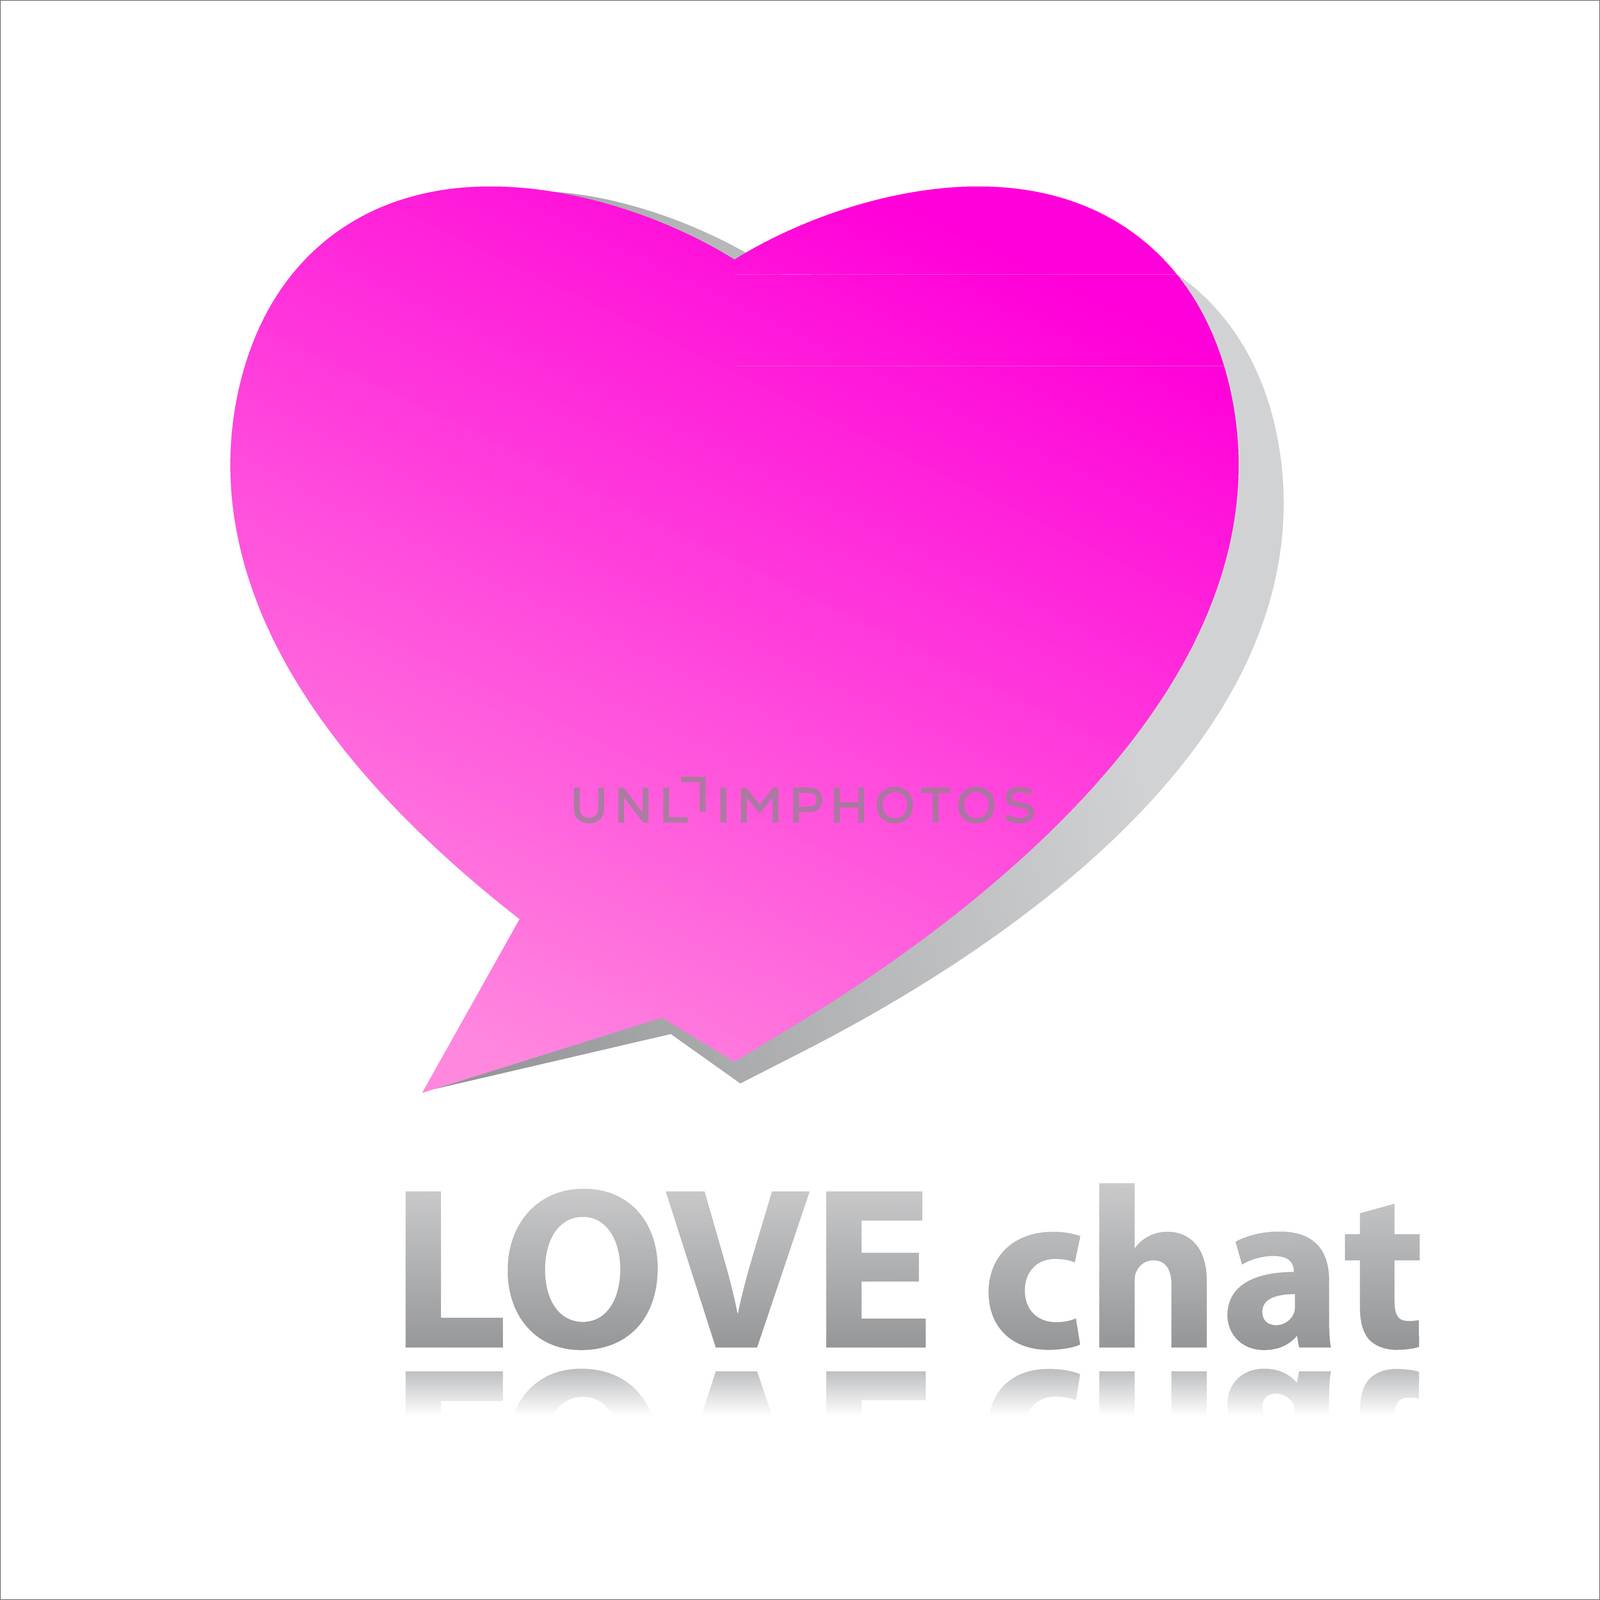 love-chat by antoshkaforever